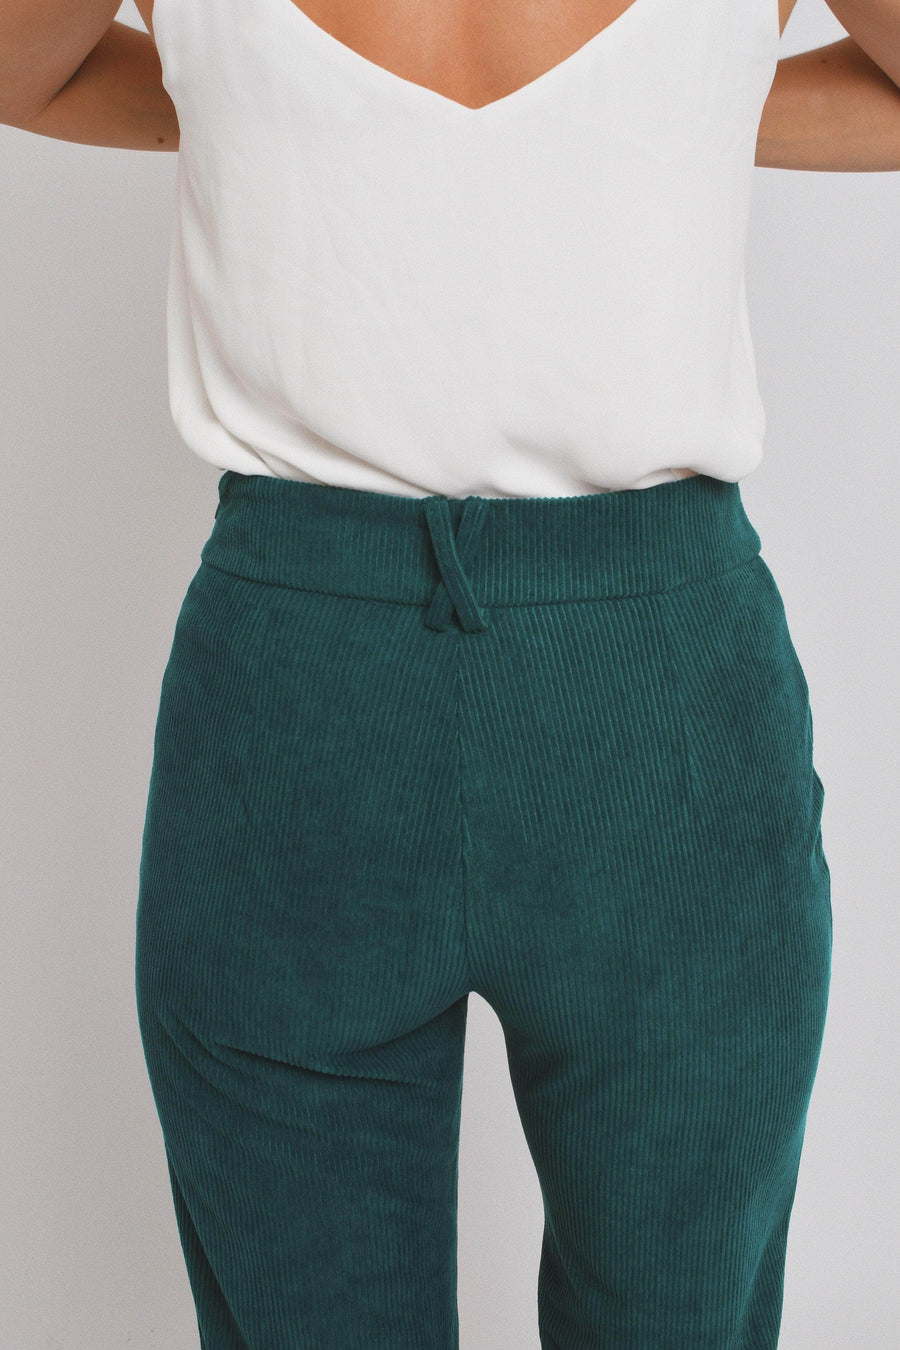 Pantalon Dipper (-60%)